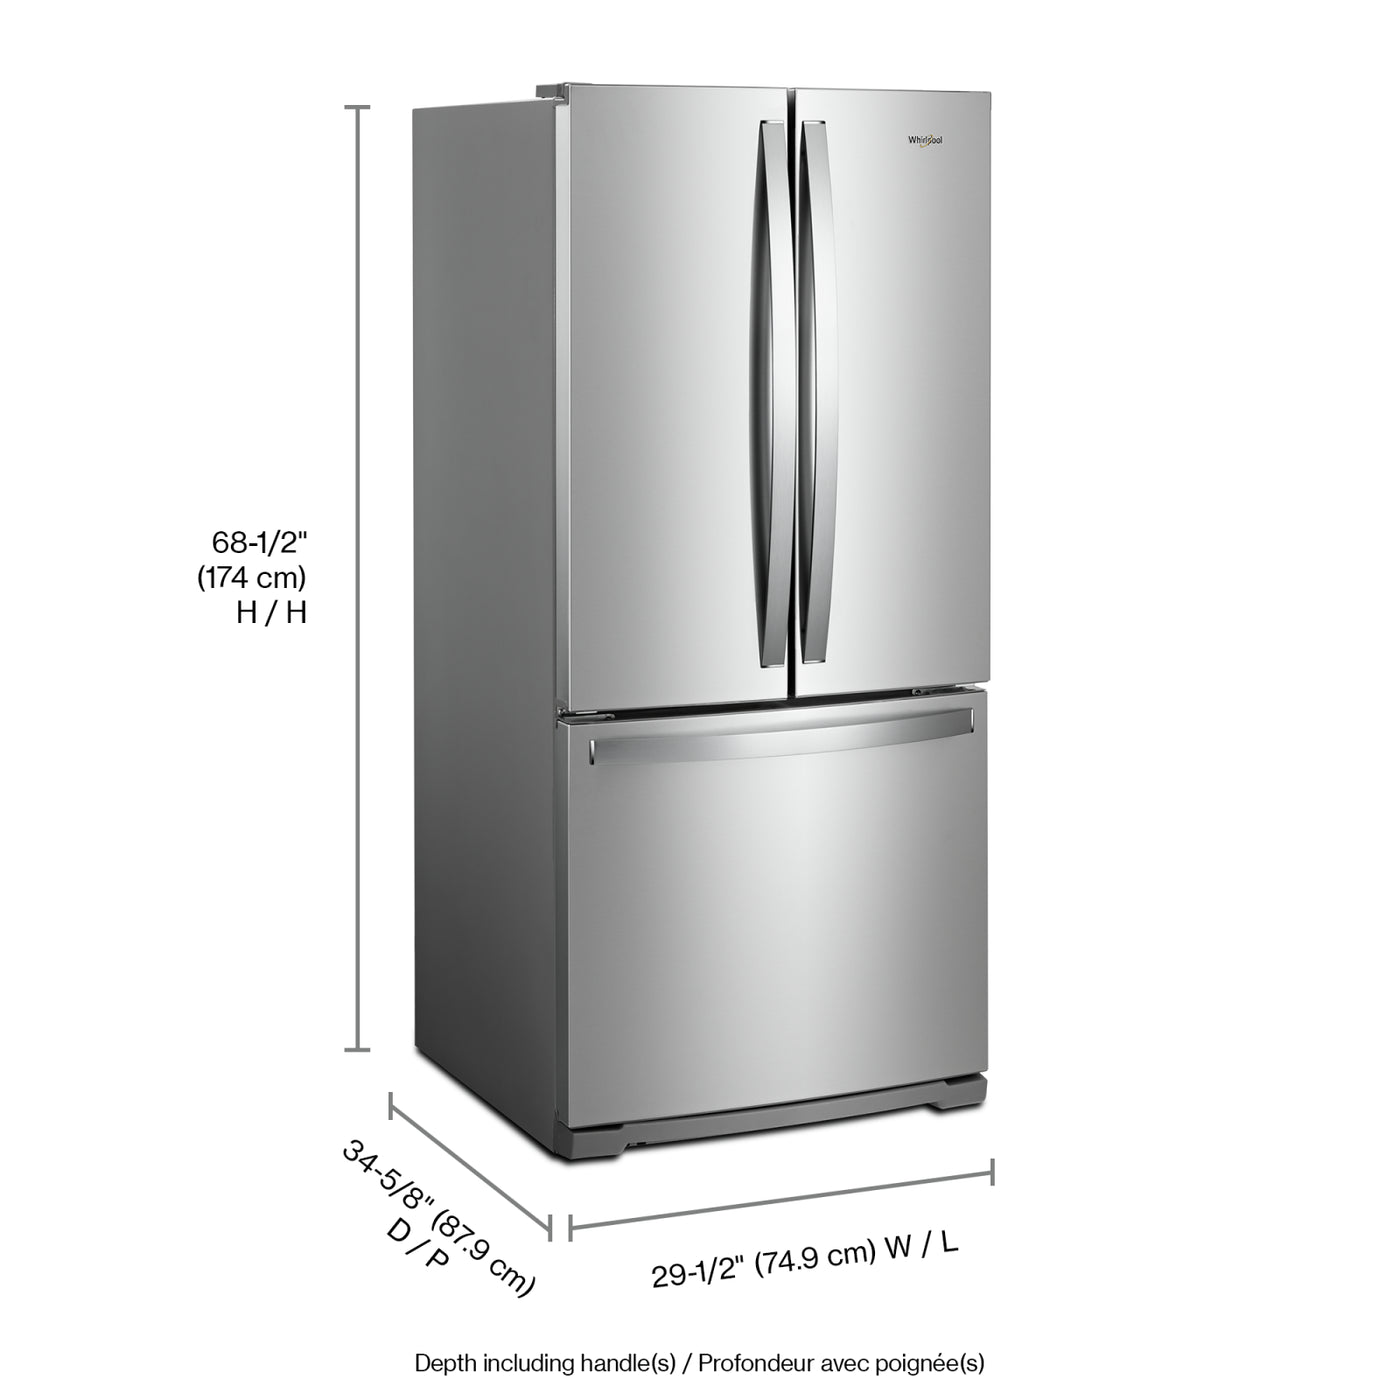 Whirlpool Stainless Steel French Door Refrigerator (20 Cu. Ft.)- WRF560SFHZ